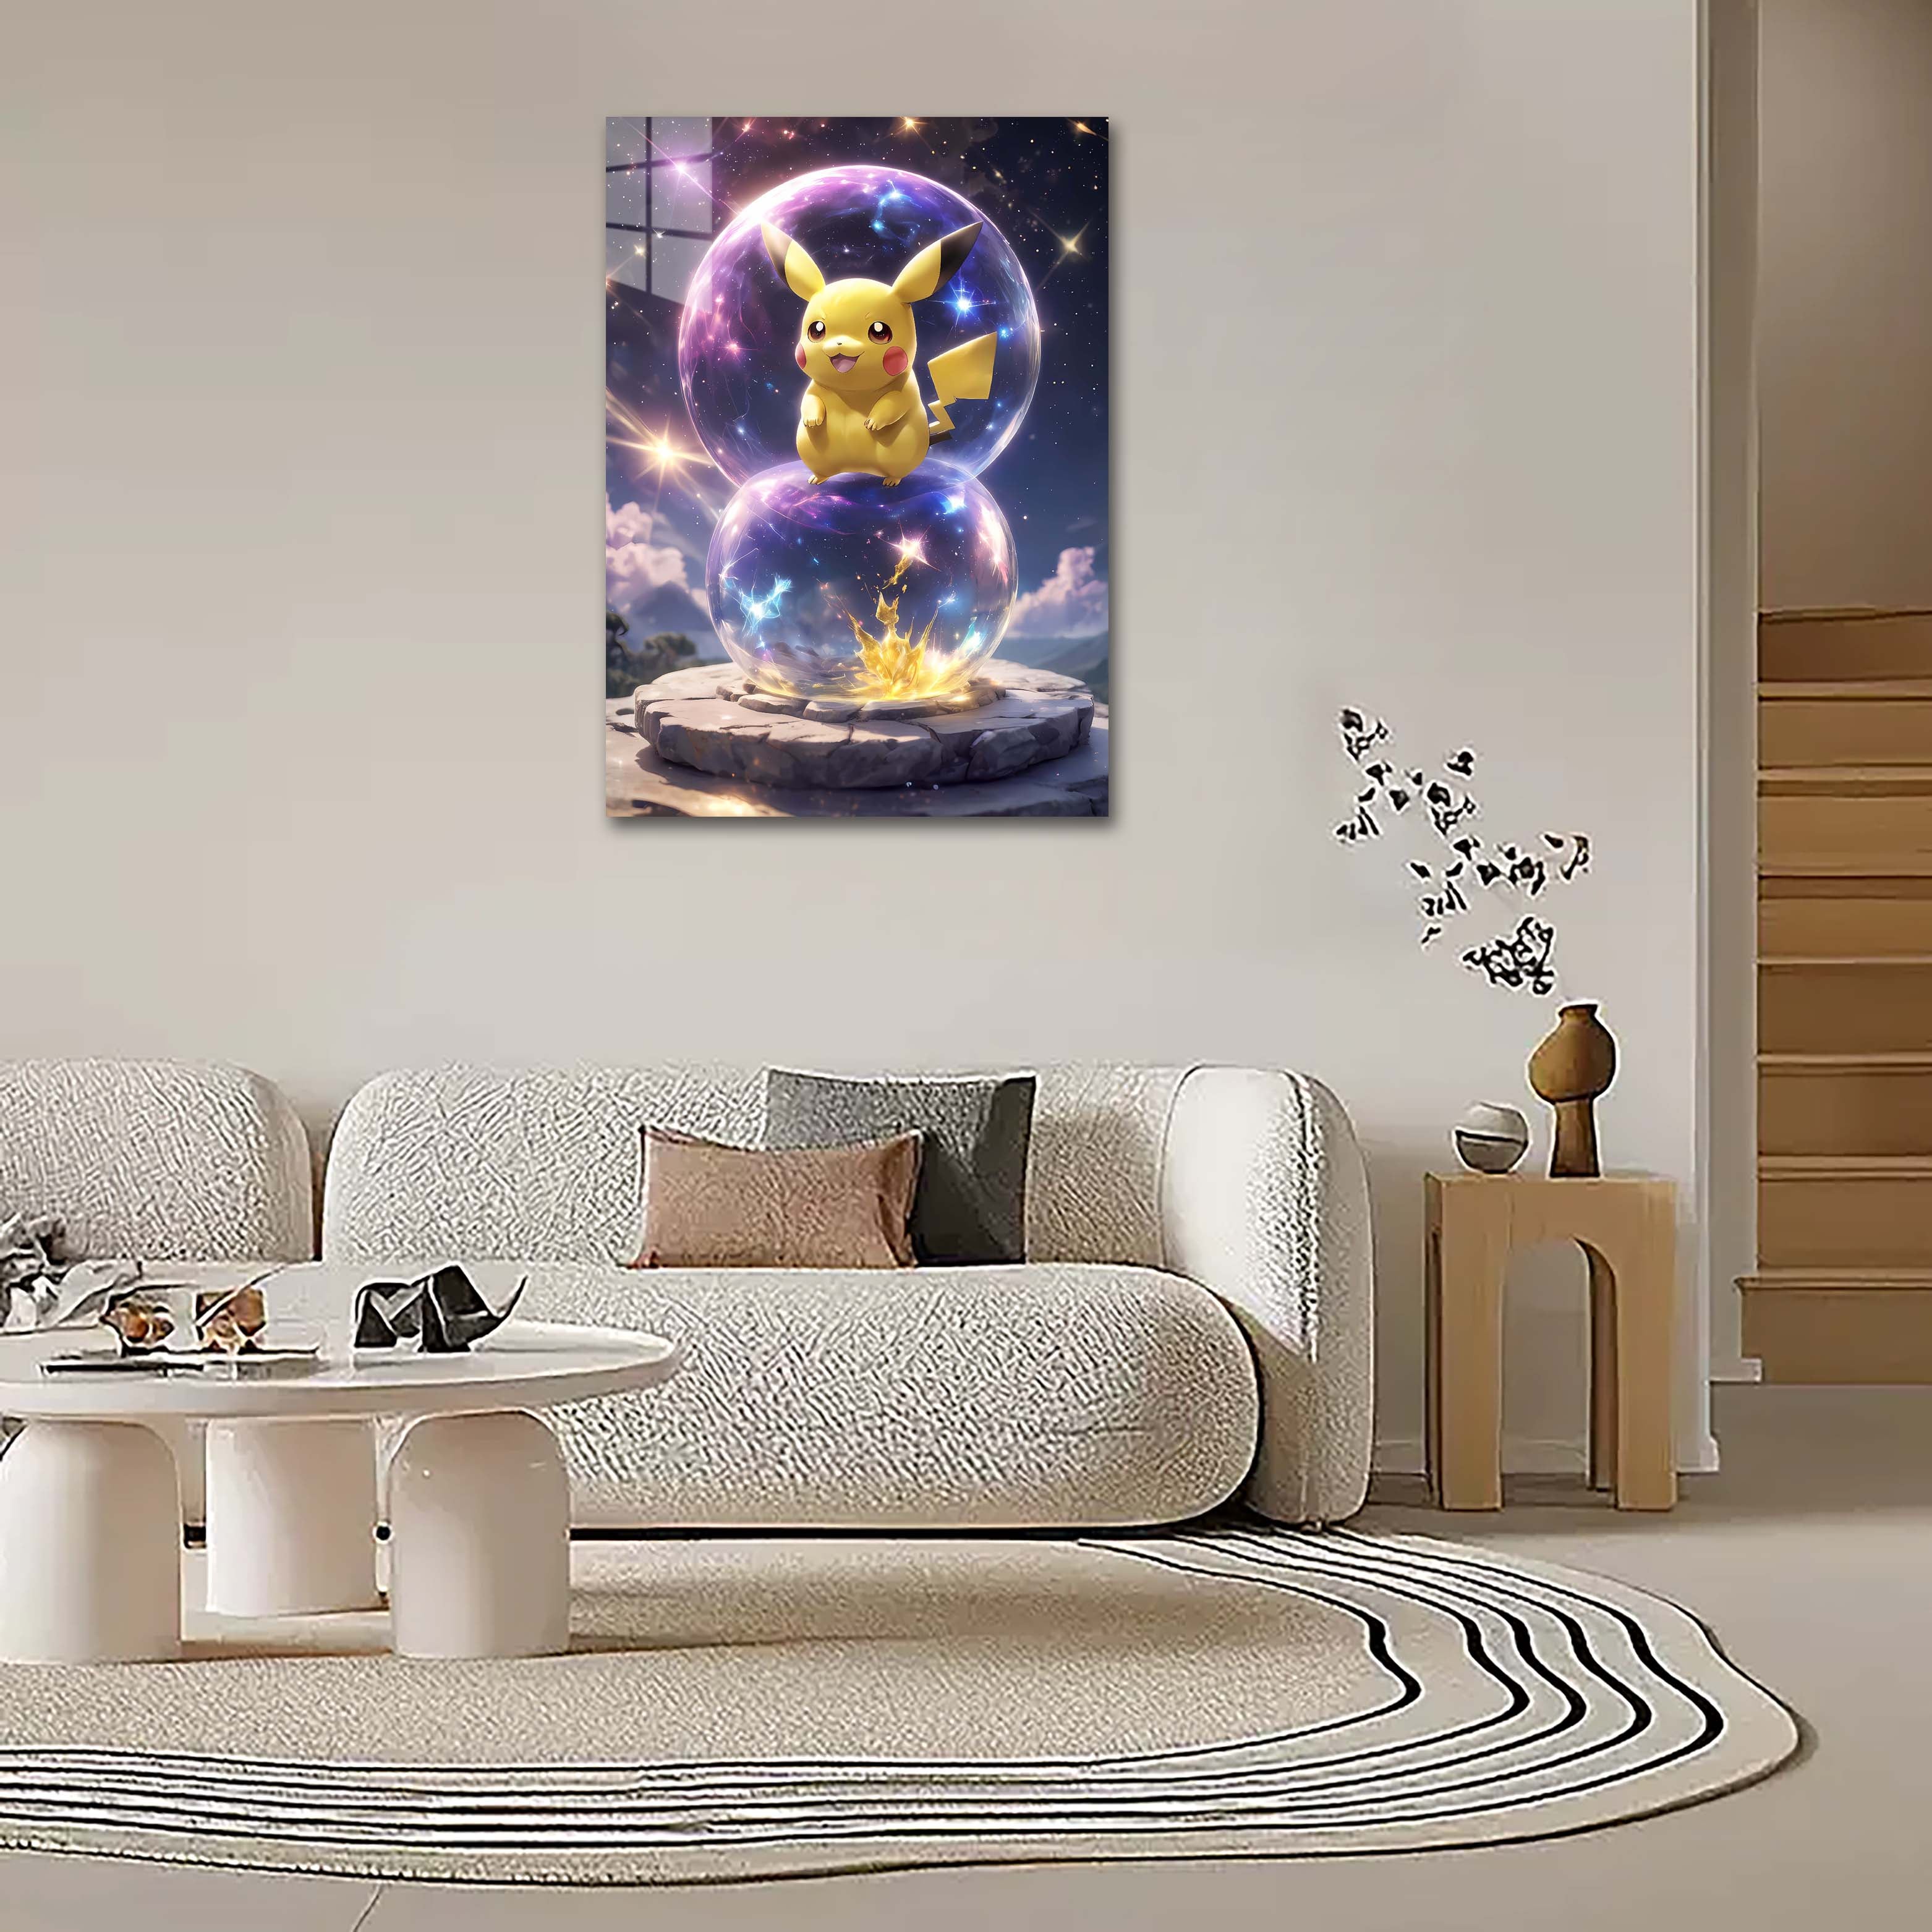 Pikachu2-designed by @Serafin Eastwood